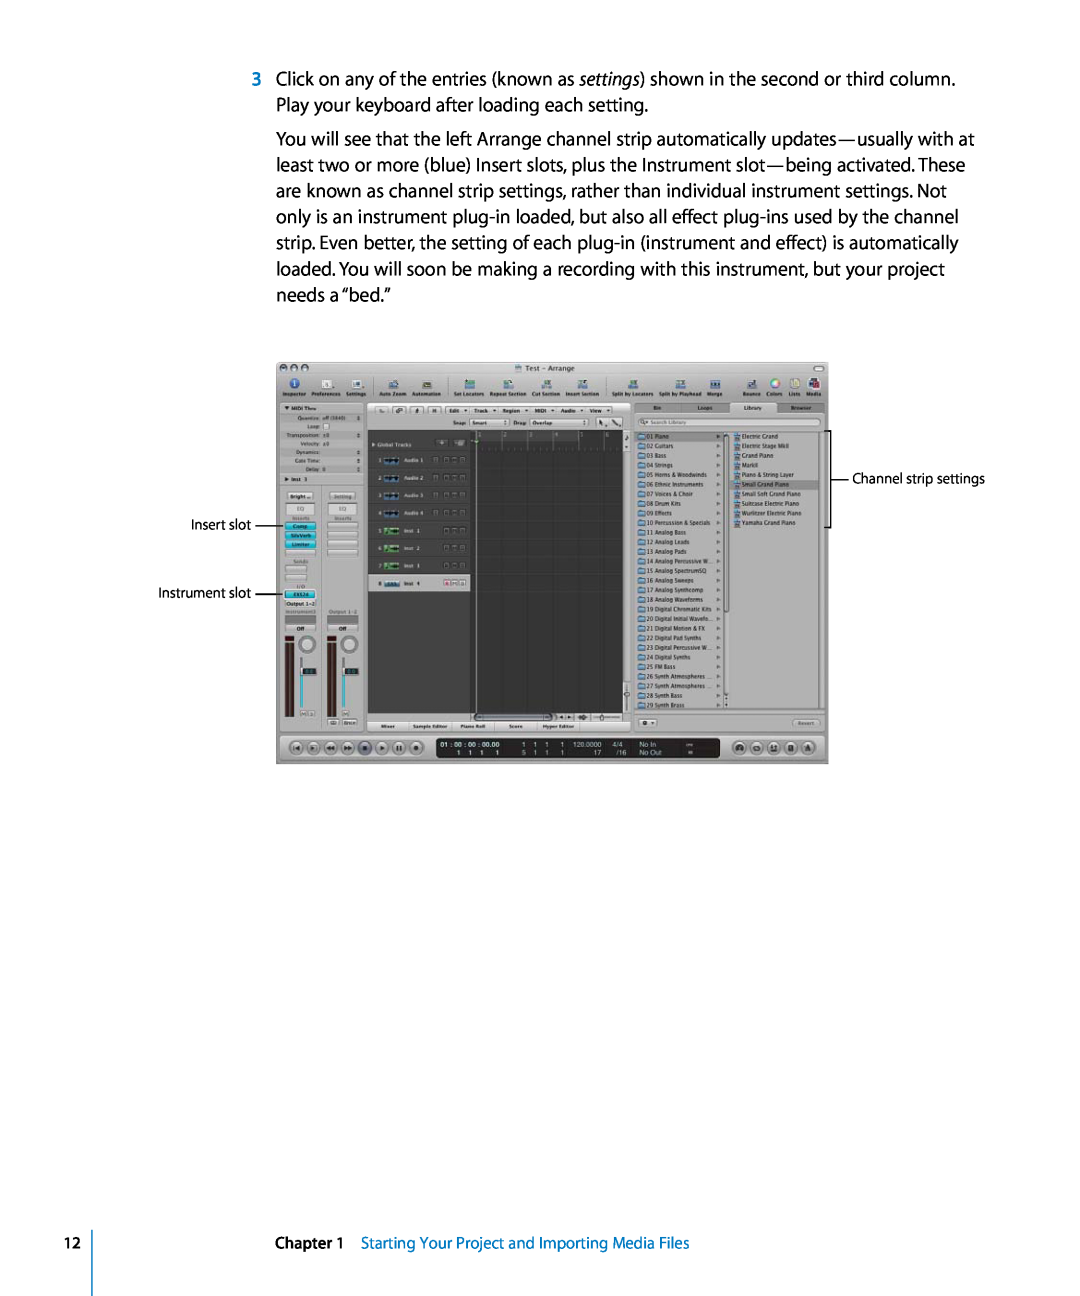 Apple 8 manual Insert slot, Channel strip settings, Instrument slot 